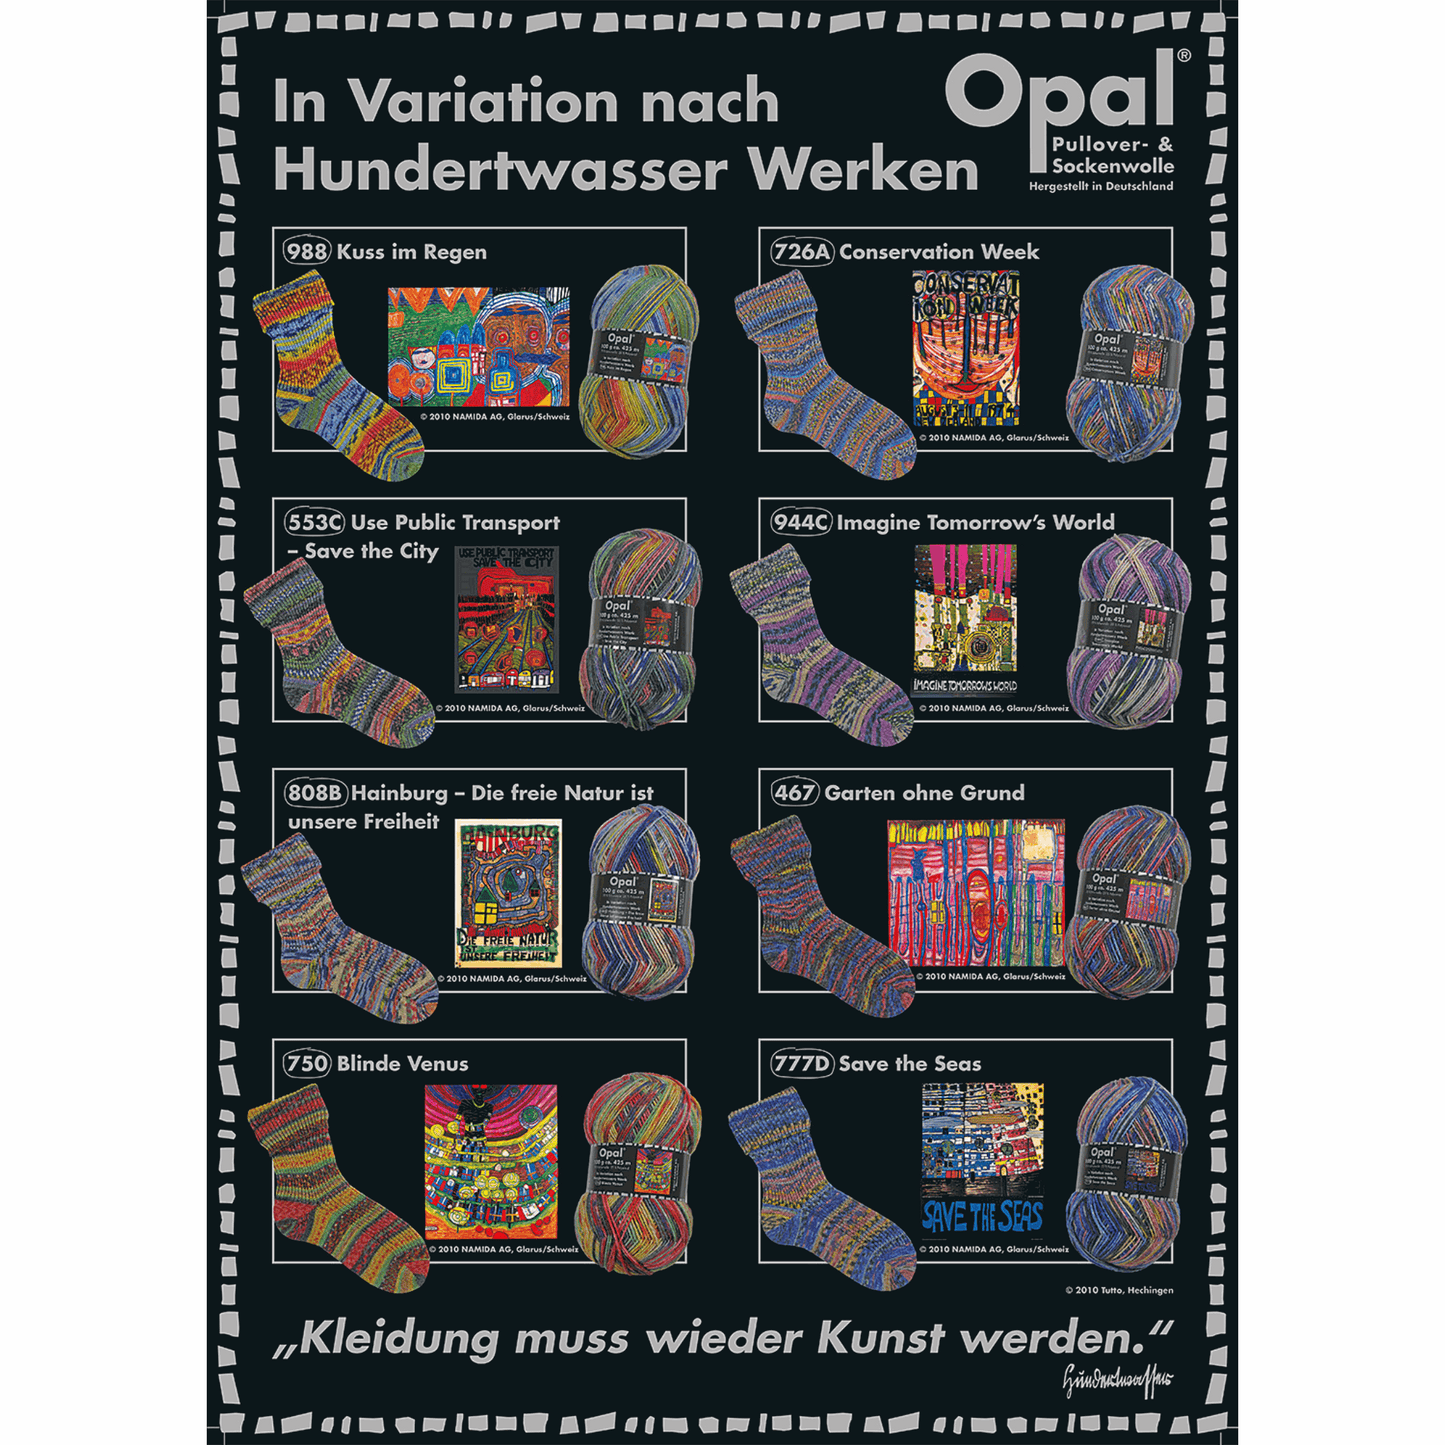 Opal Hundertwasser III 100 G, 97740, color imagine tomo 3203